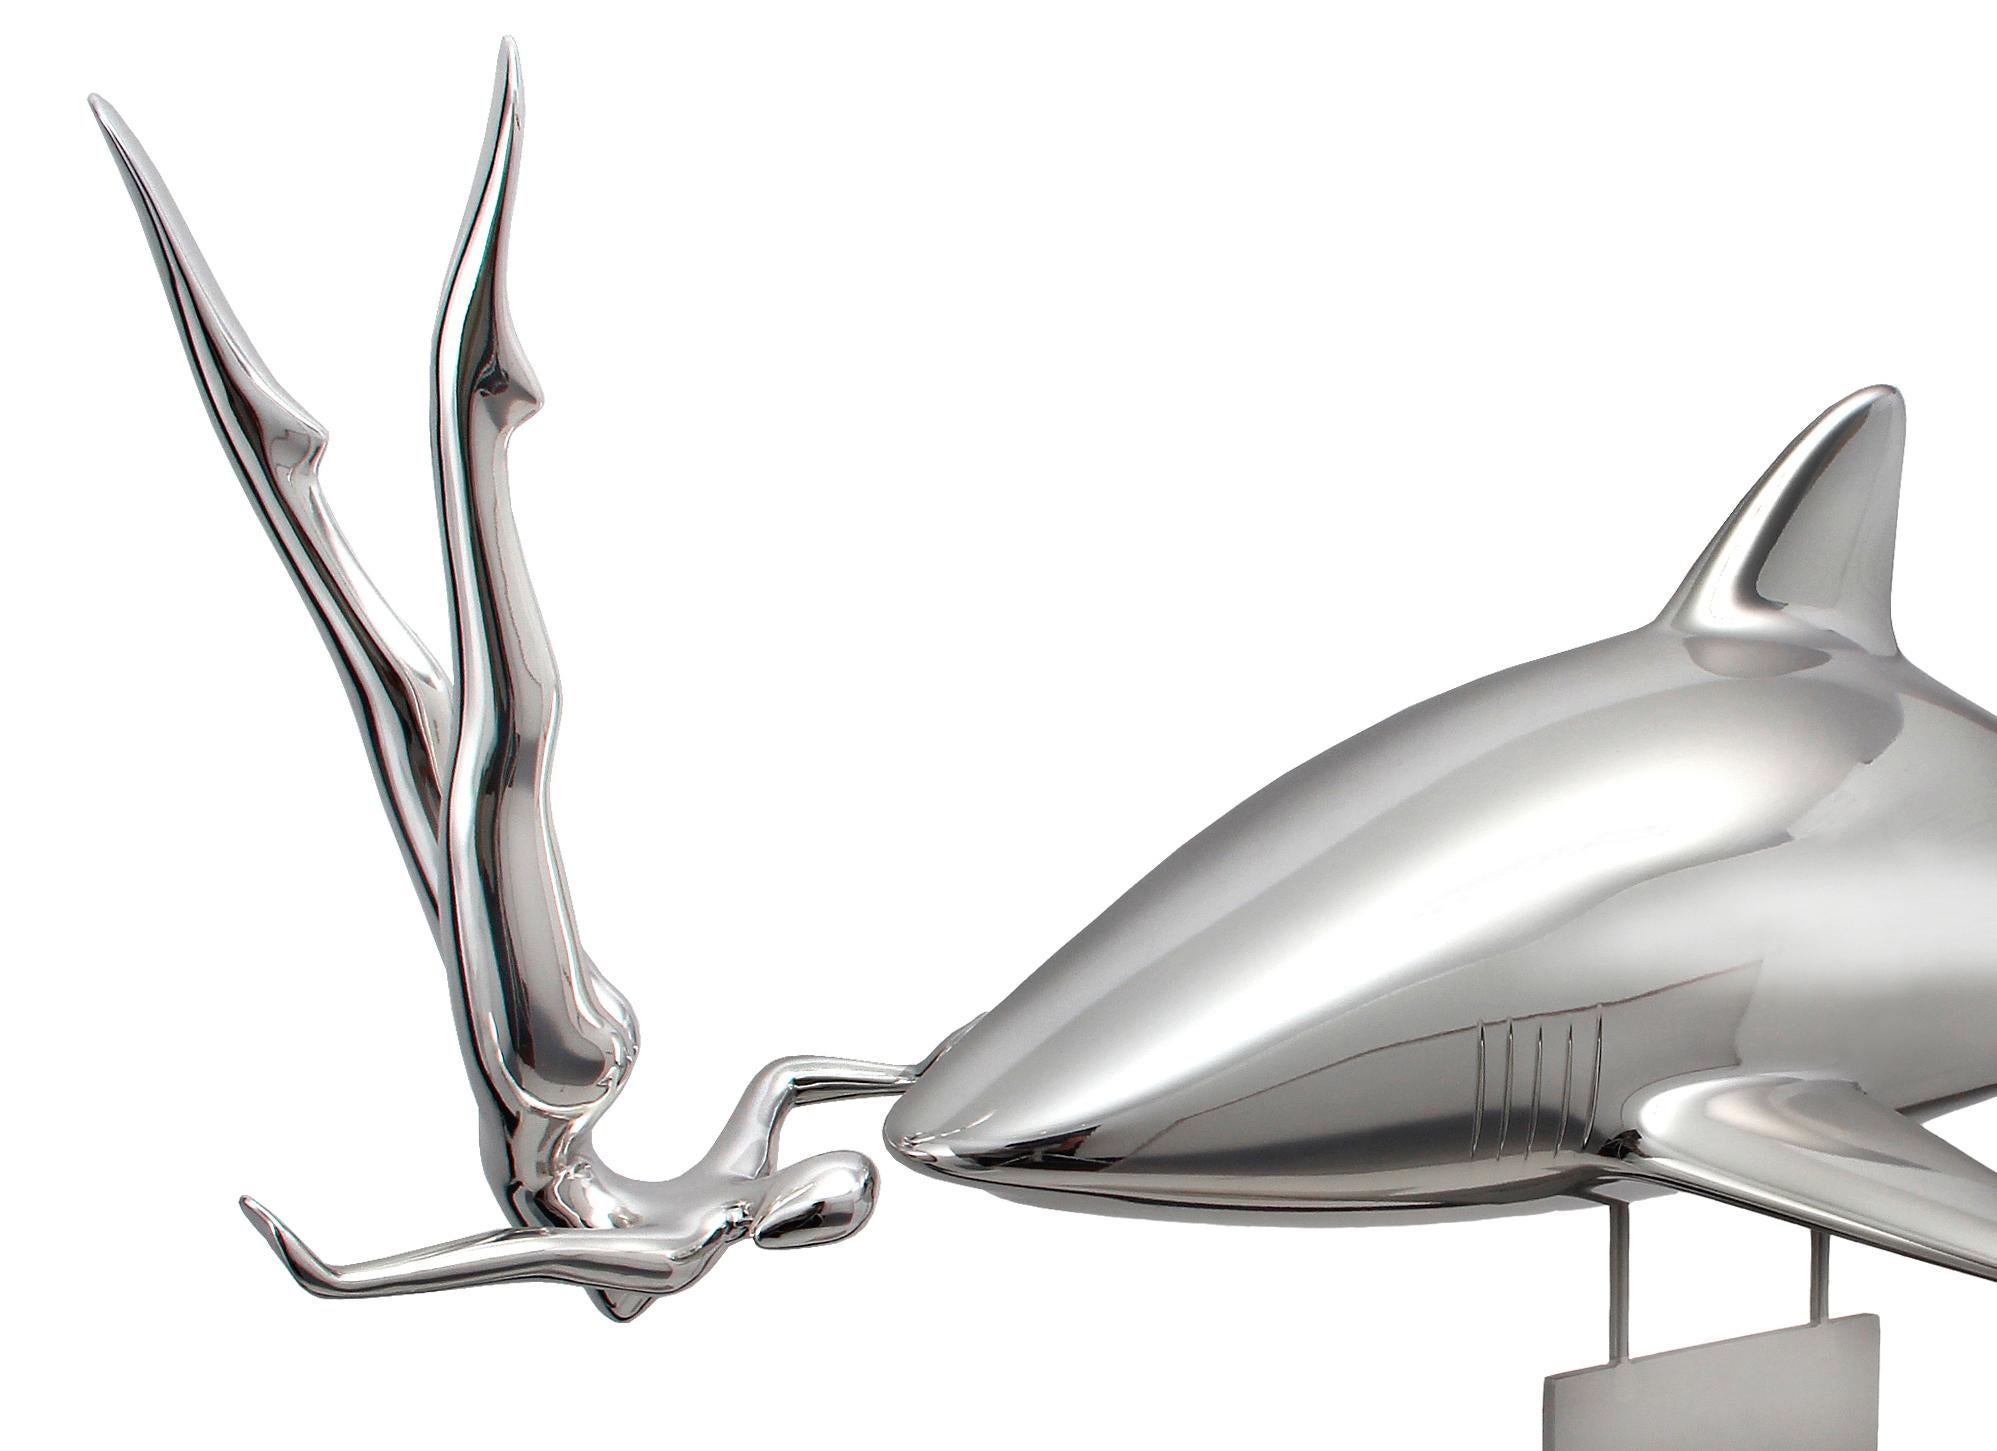 Bernard Rives  Shark  Silver  SOS  original Aluminiun fiberglass sculpture For Sale 2